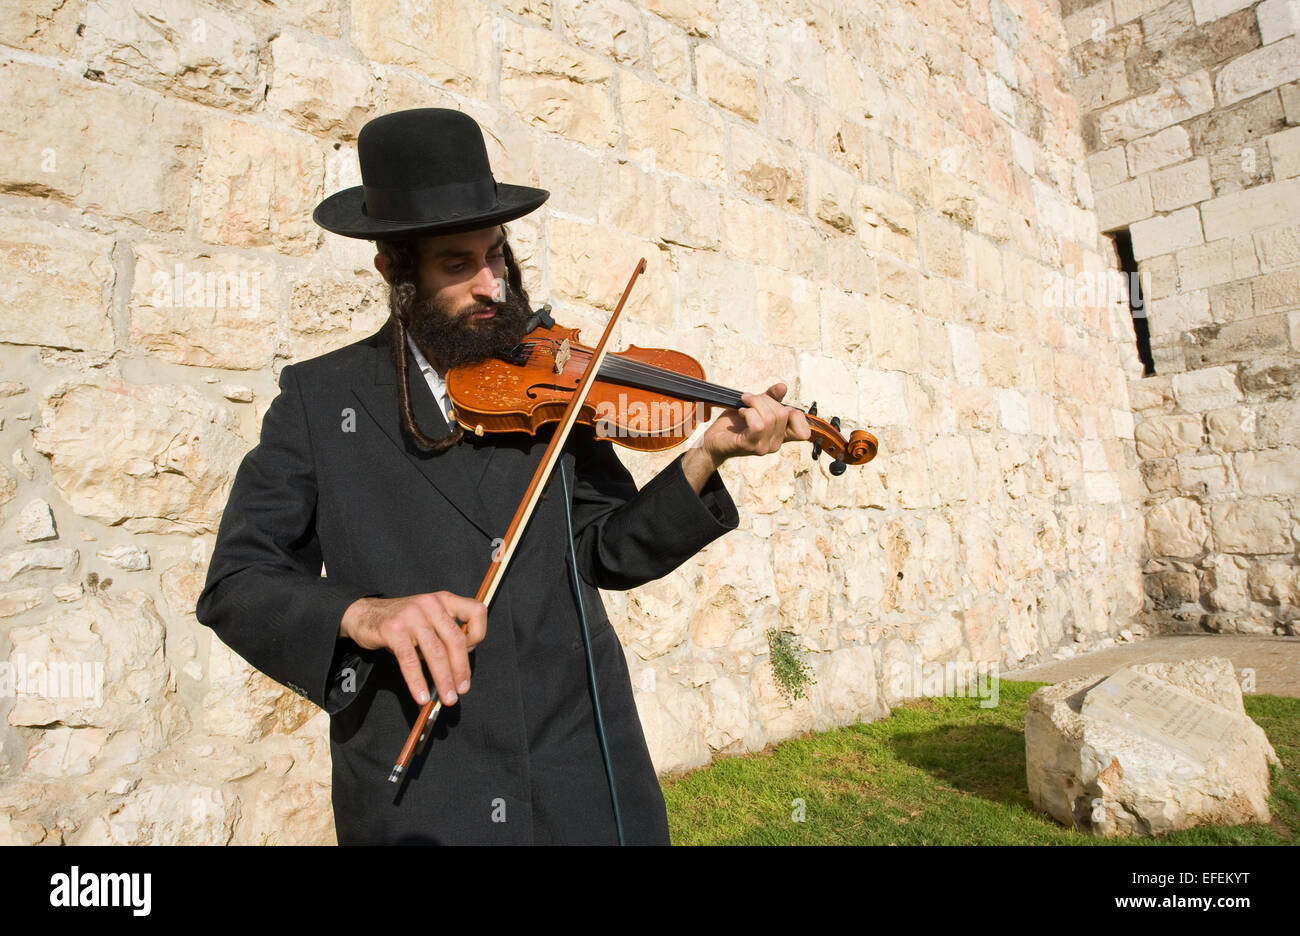 A jewish fiddler is playing violin on the street near Jaffa gate in Jerusalem Stock Photo